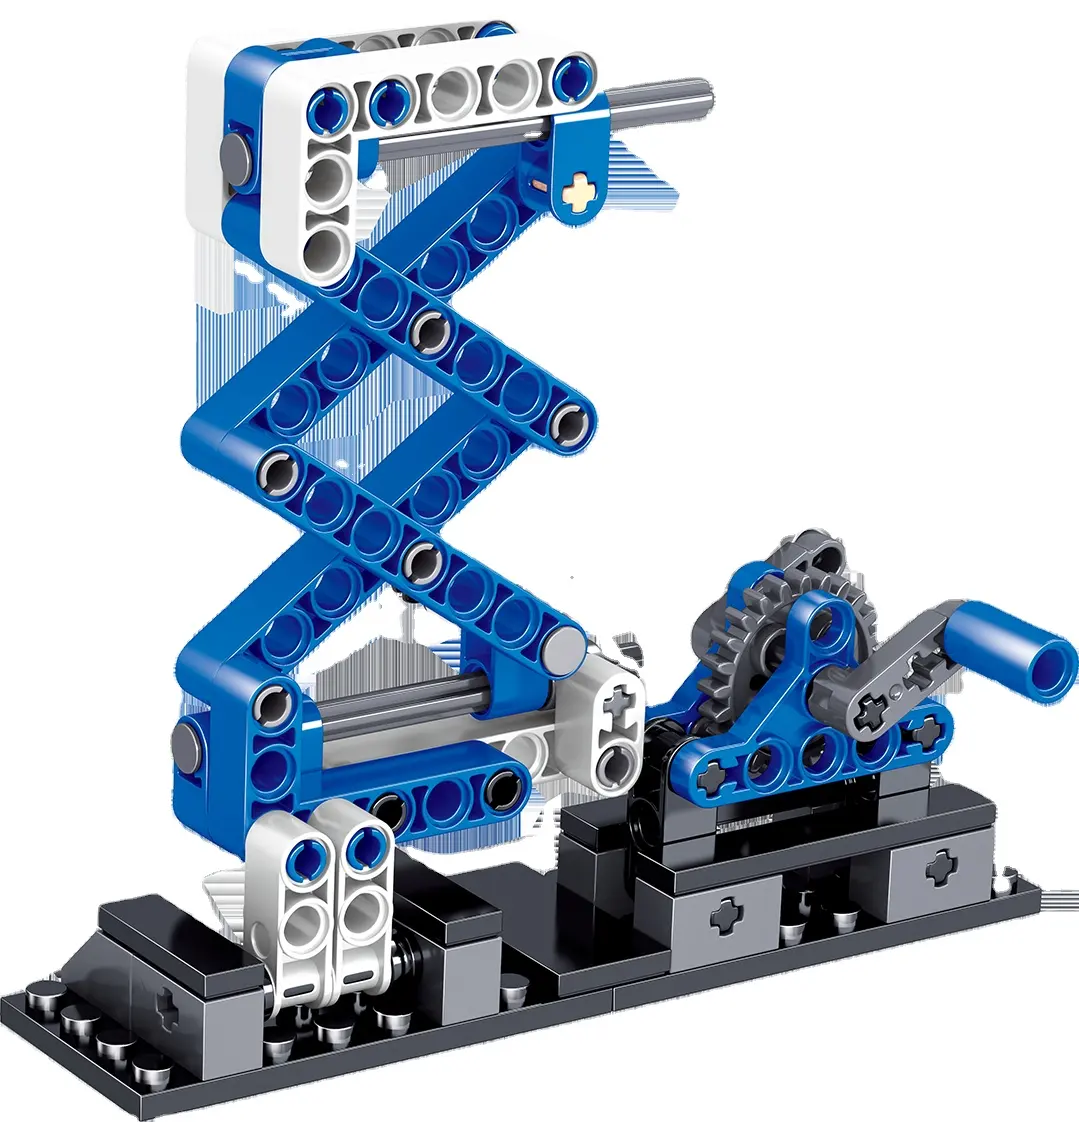 NEW Programed Robot Electronic Educational Bricks Compatible With Legoed WEDO 2.0 STEM Building Block Set DIY Toys Educational